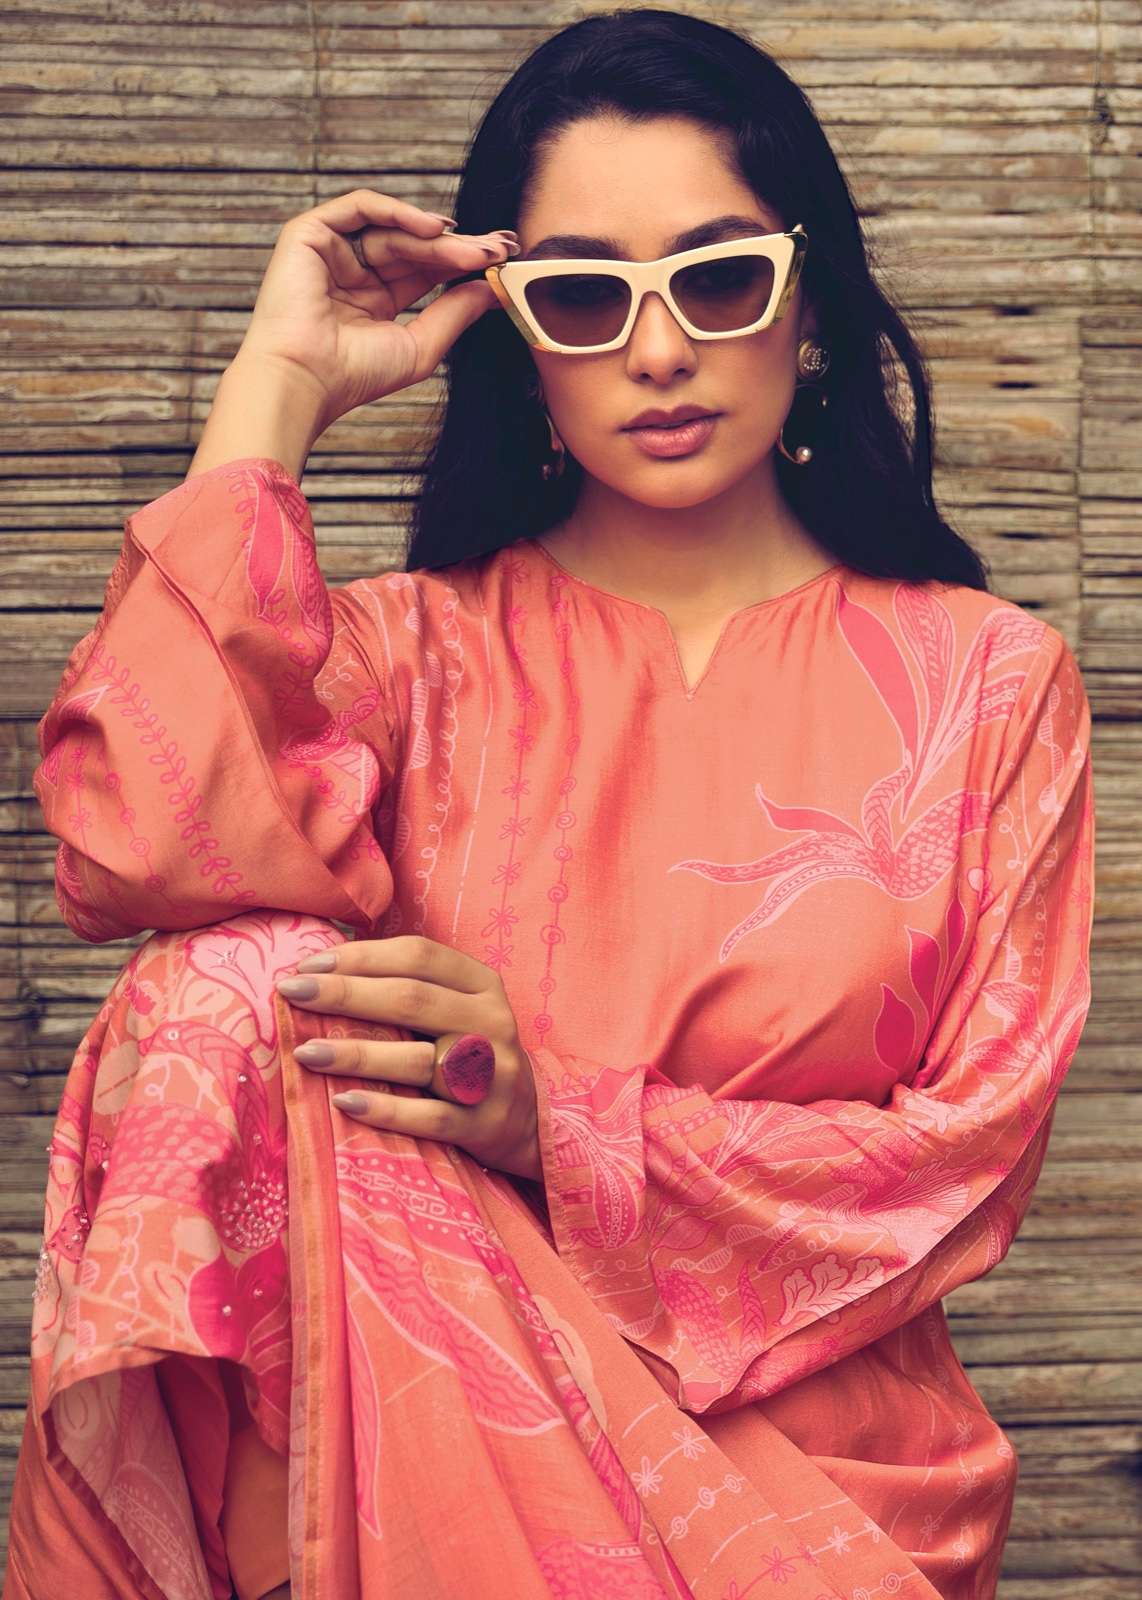 sadhana fashion kavleen 10017-10024 series latest pakistani salwar kameez wholesaler surat gujarat